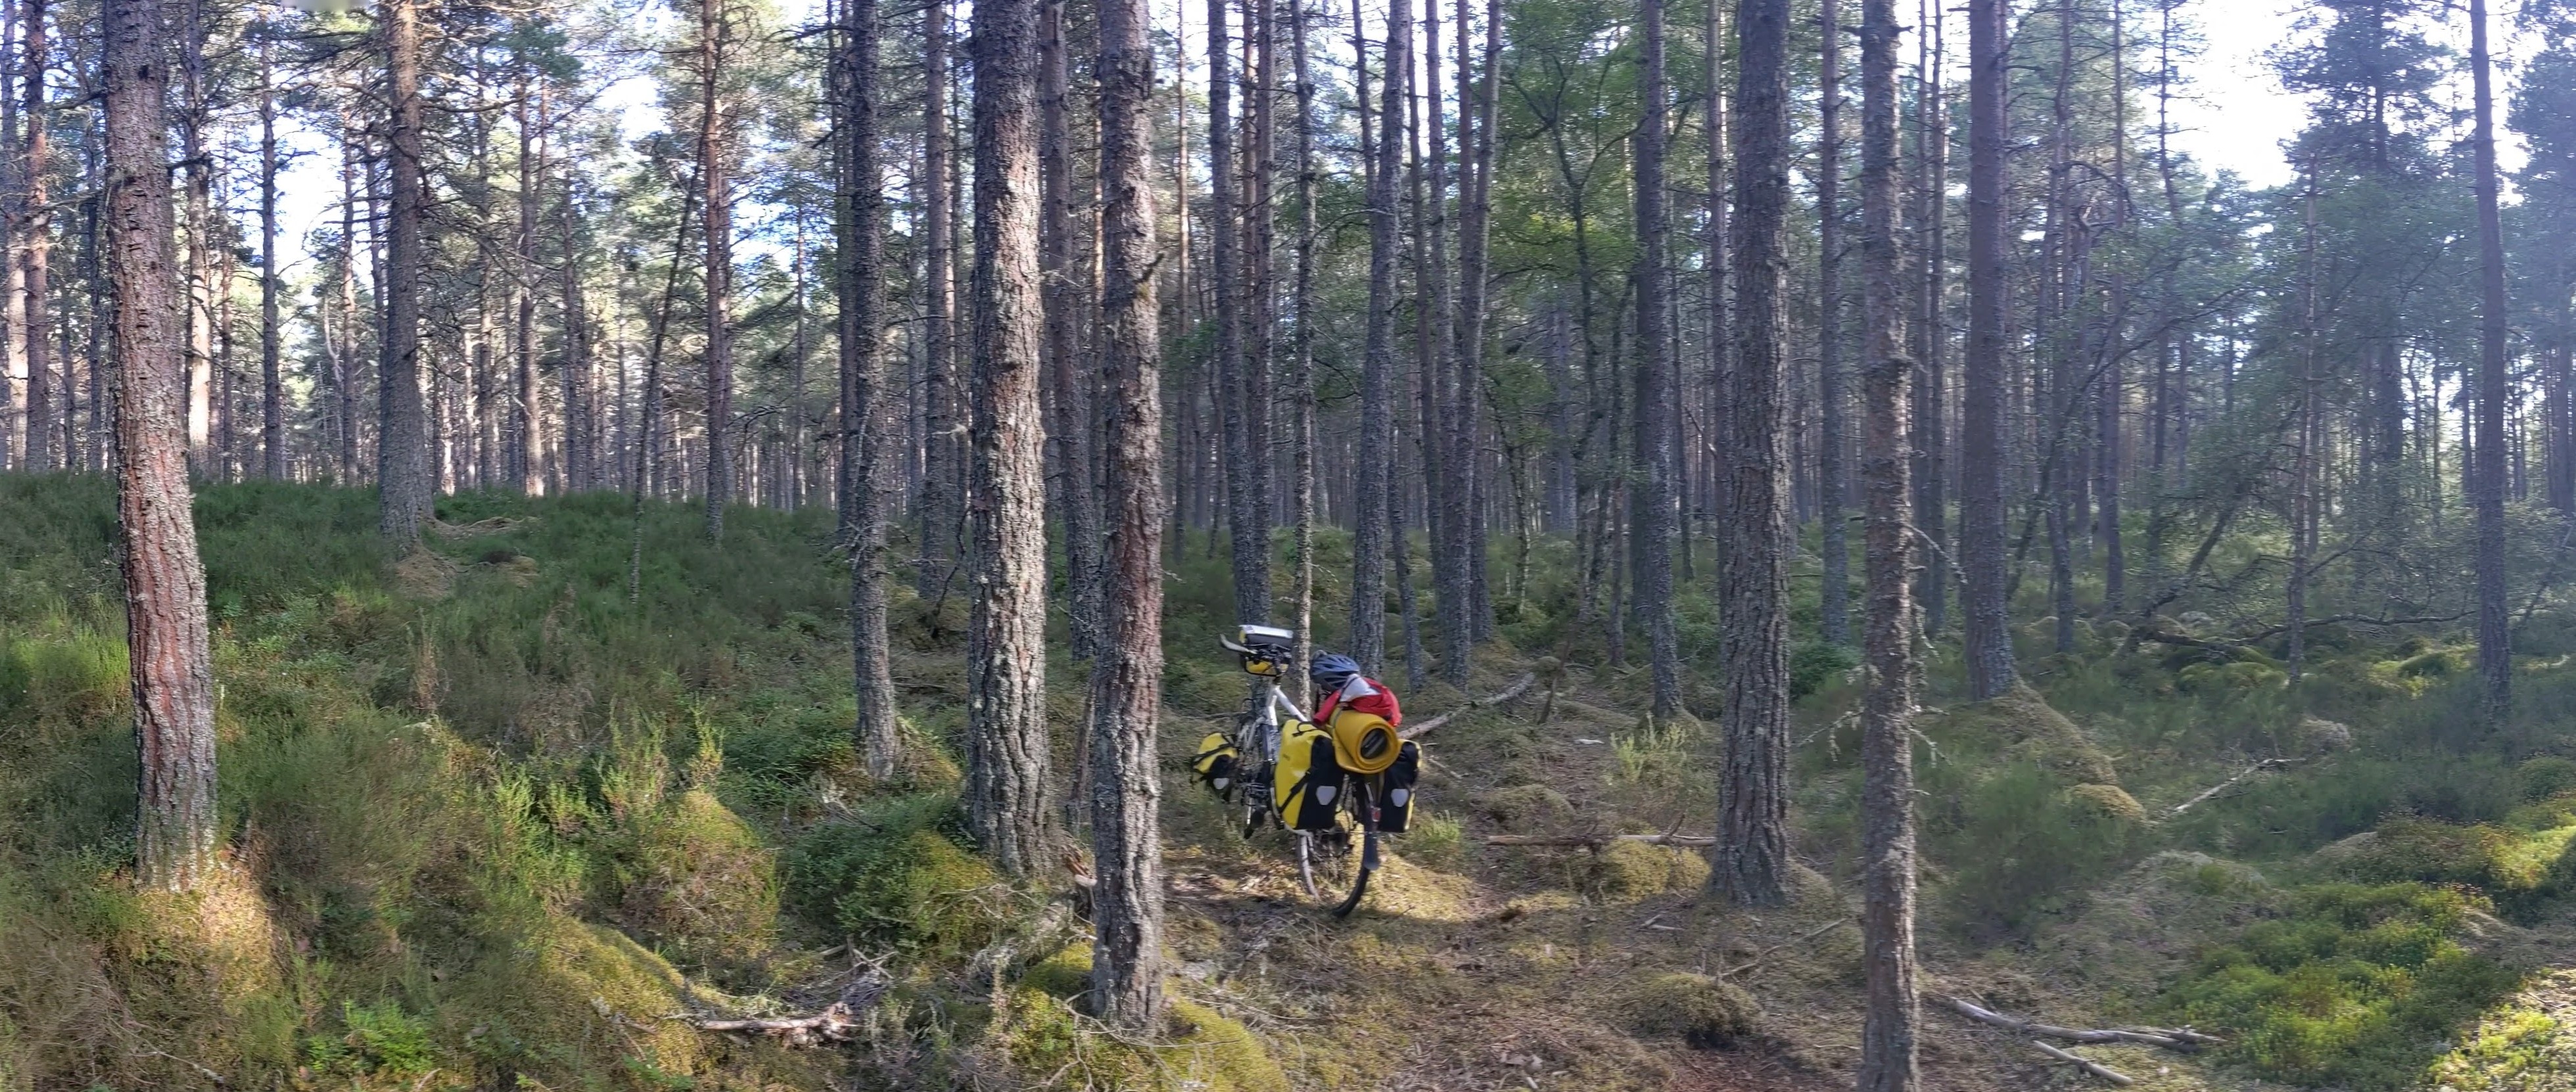 Bike in a forest bogland